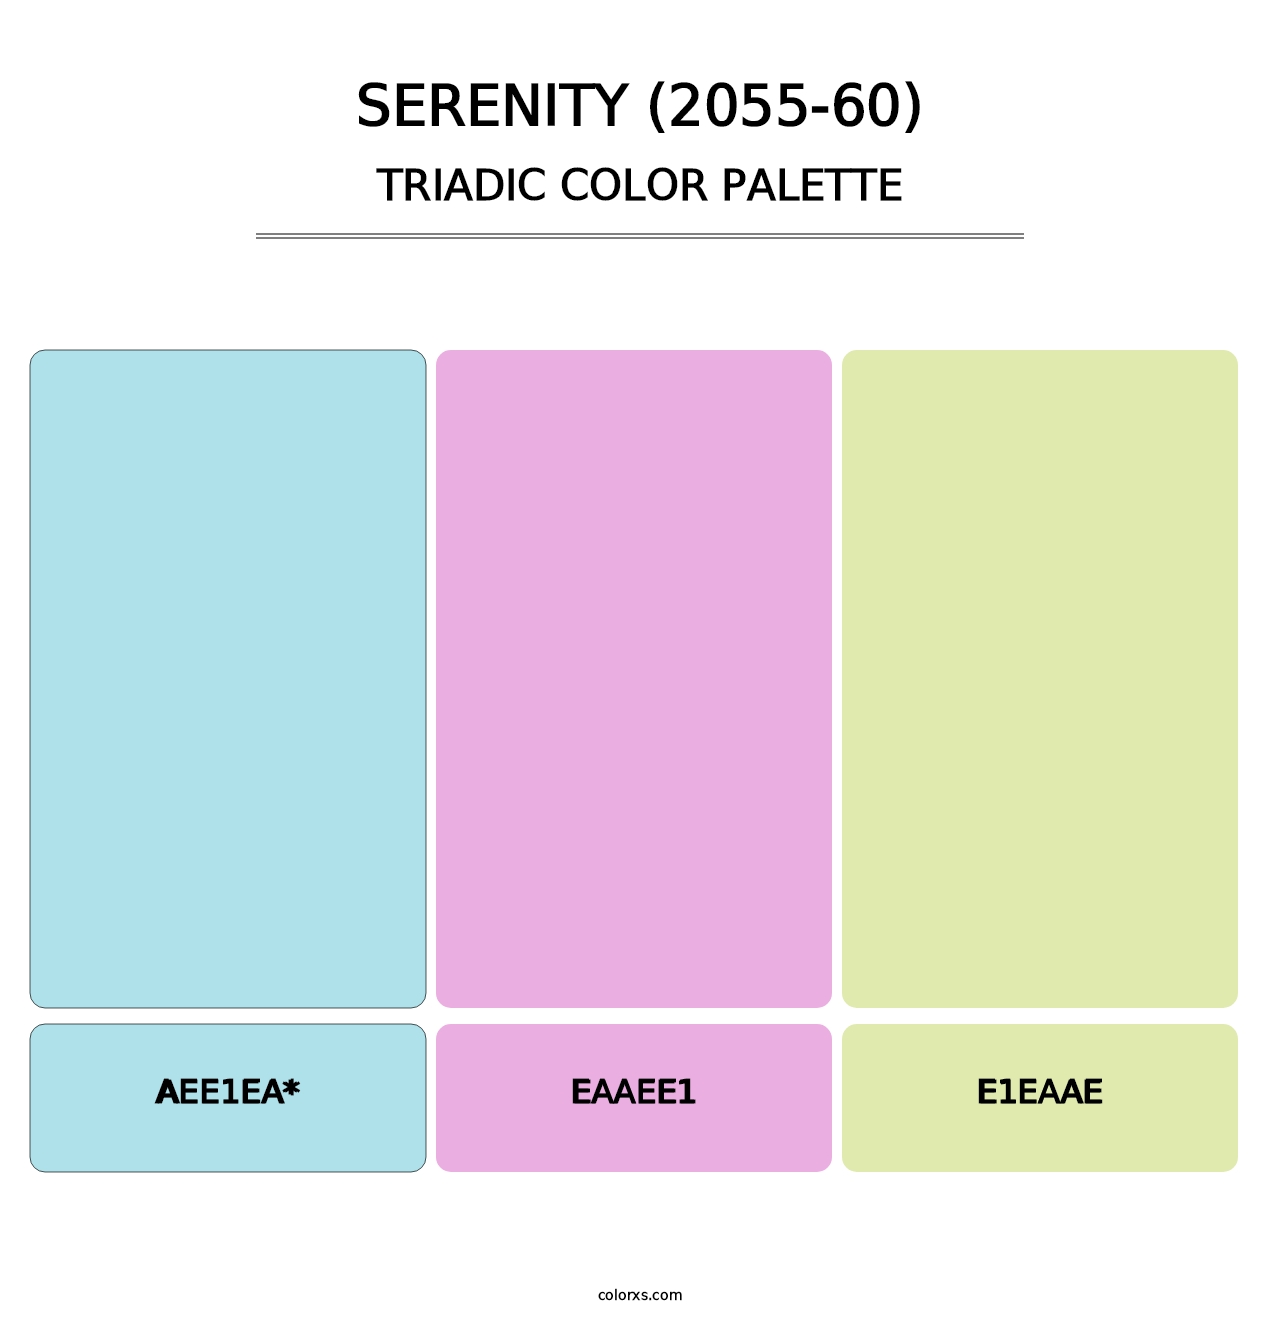 Serenity (2055-60) - Triadic Color Palette